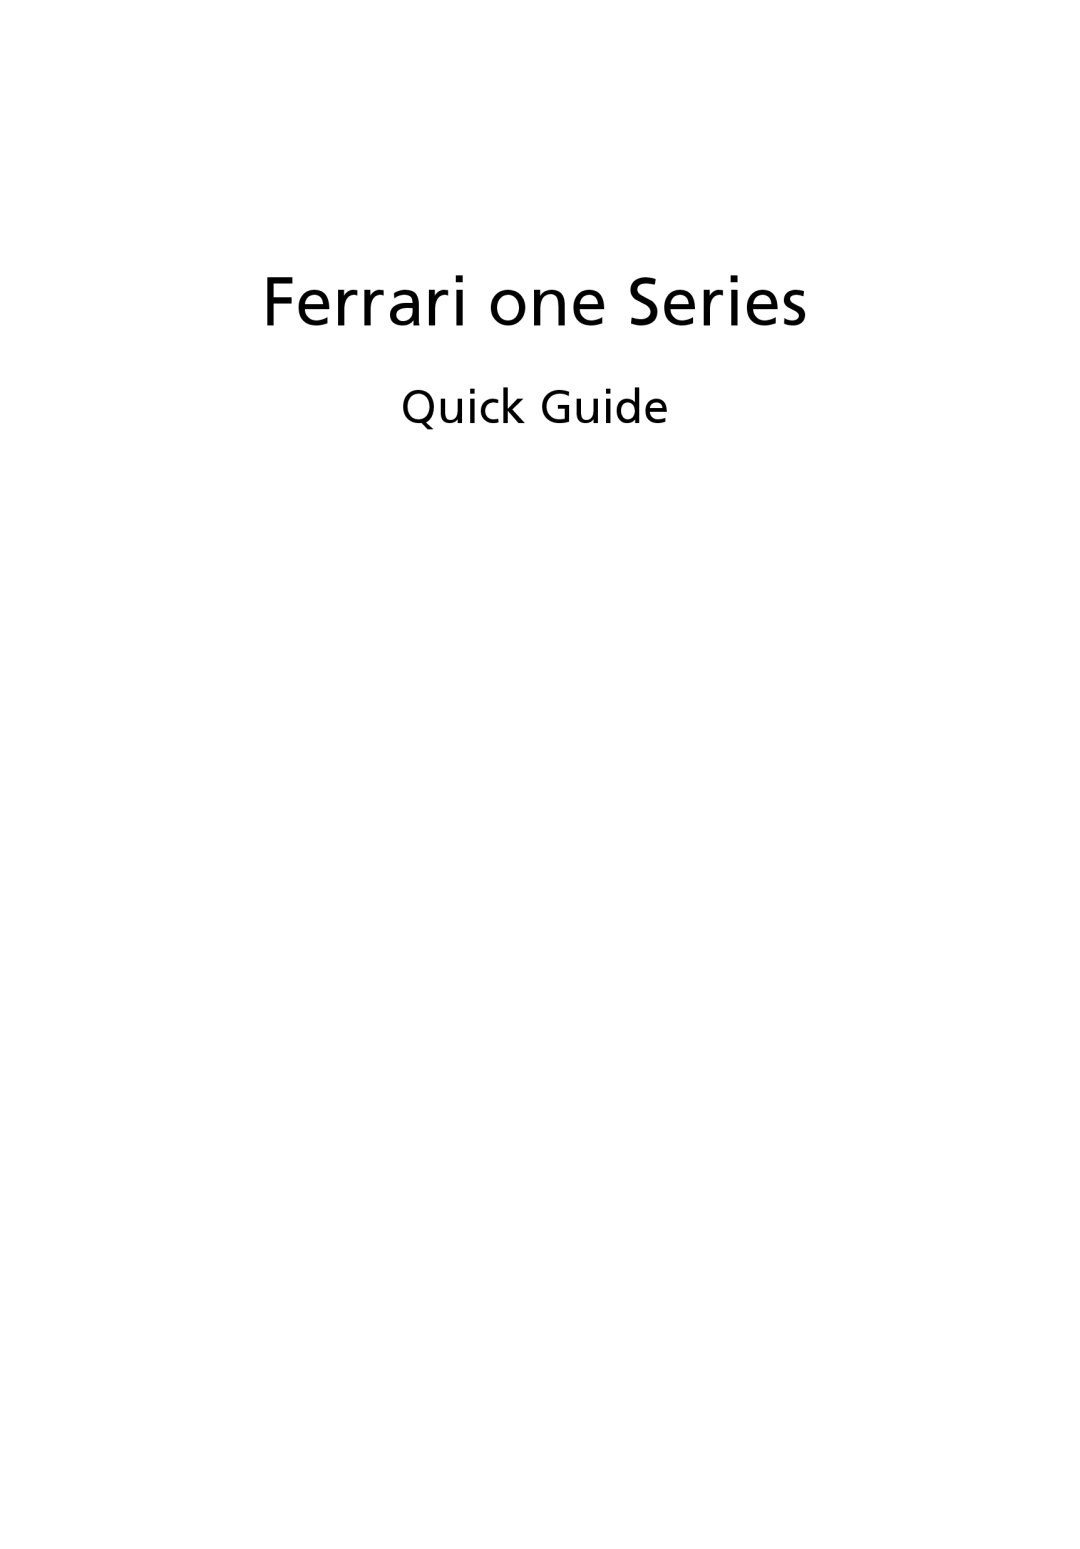 Acer 200 manual Quick Guide, Ferrari one Series 